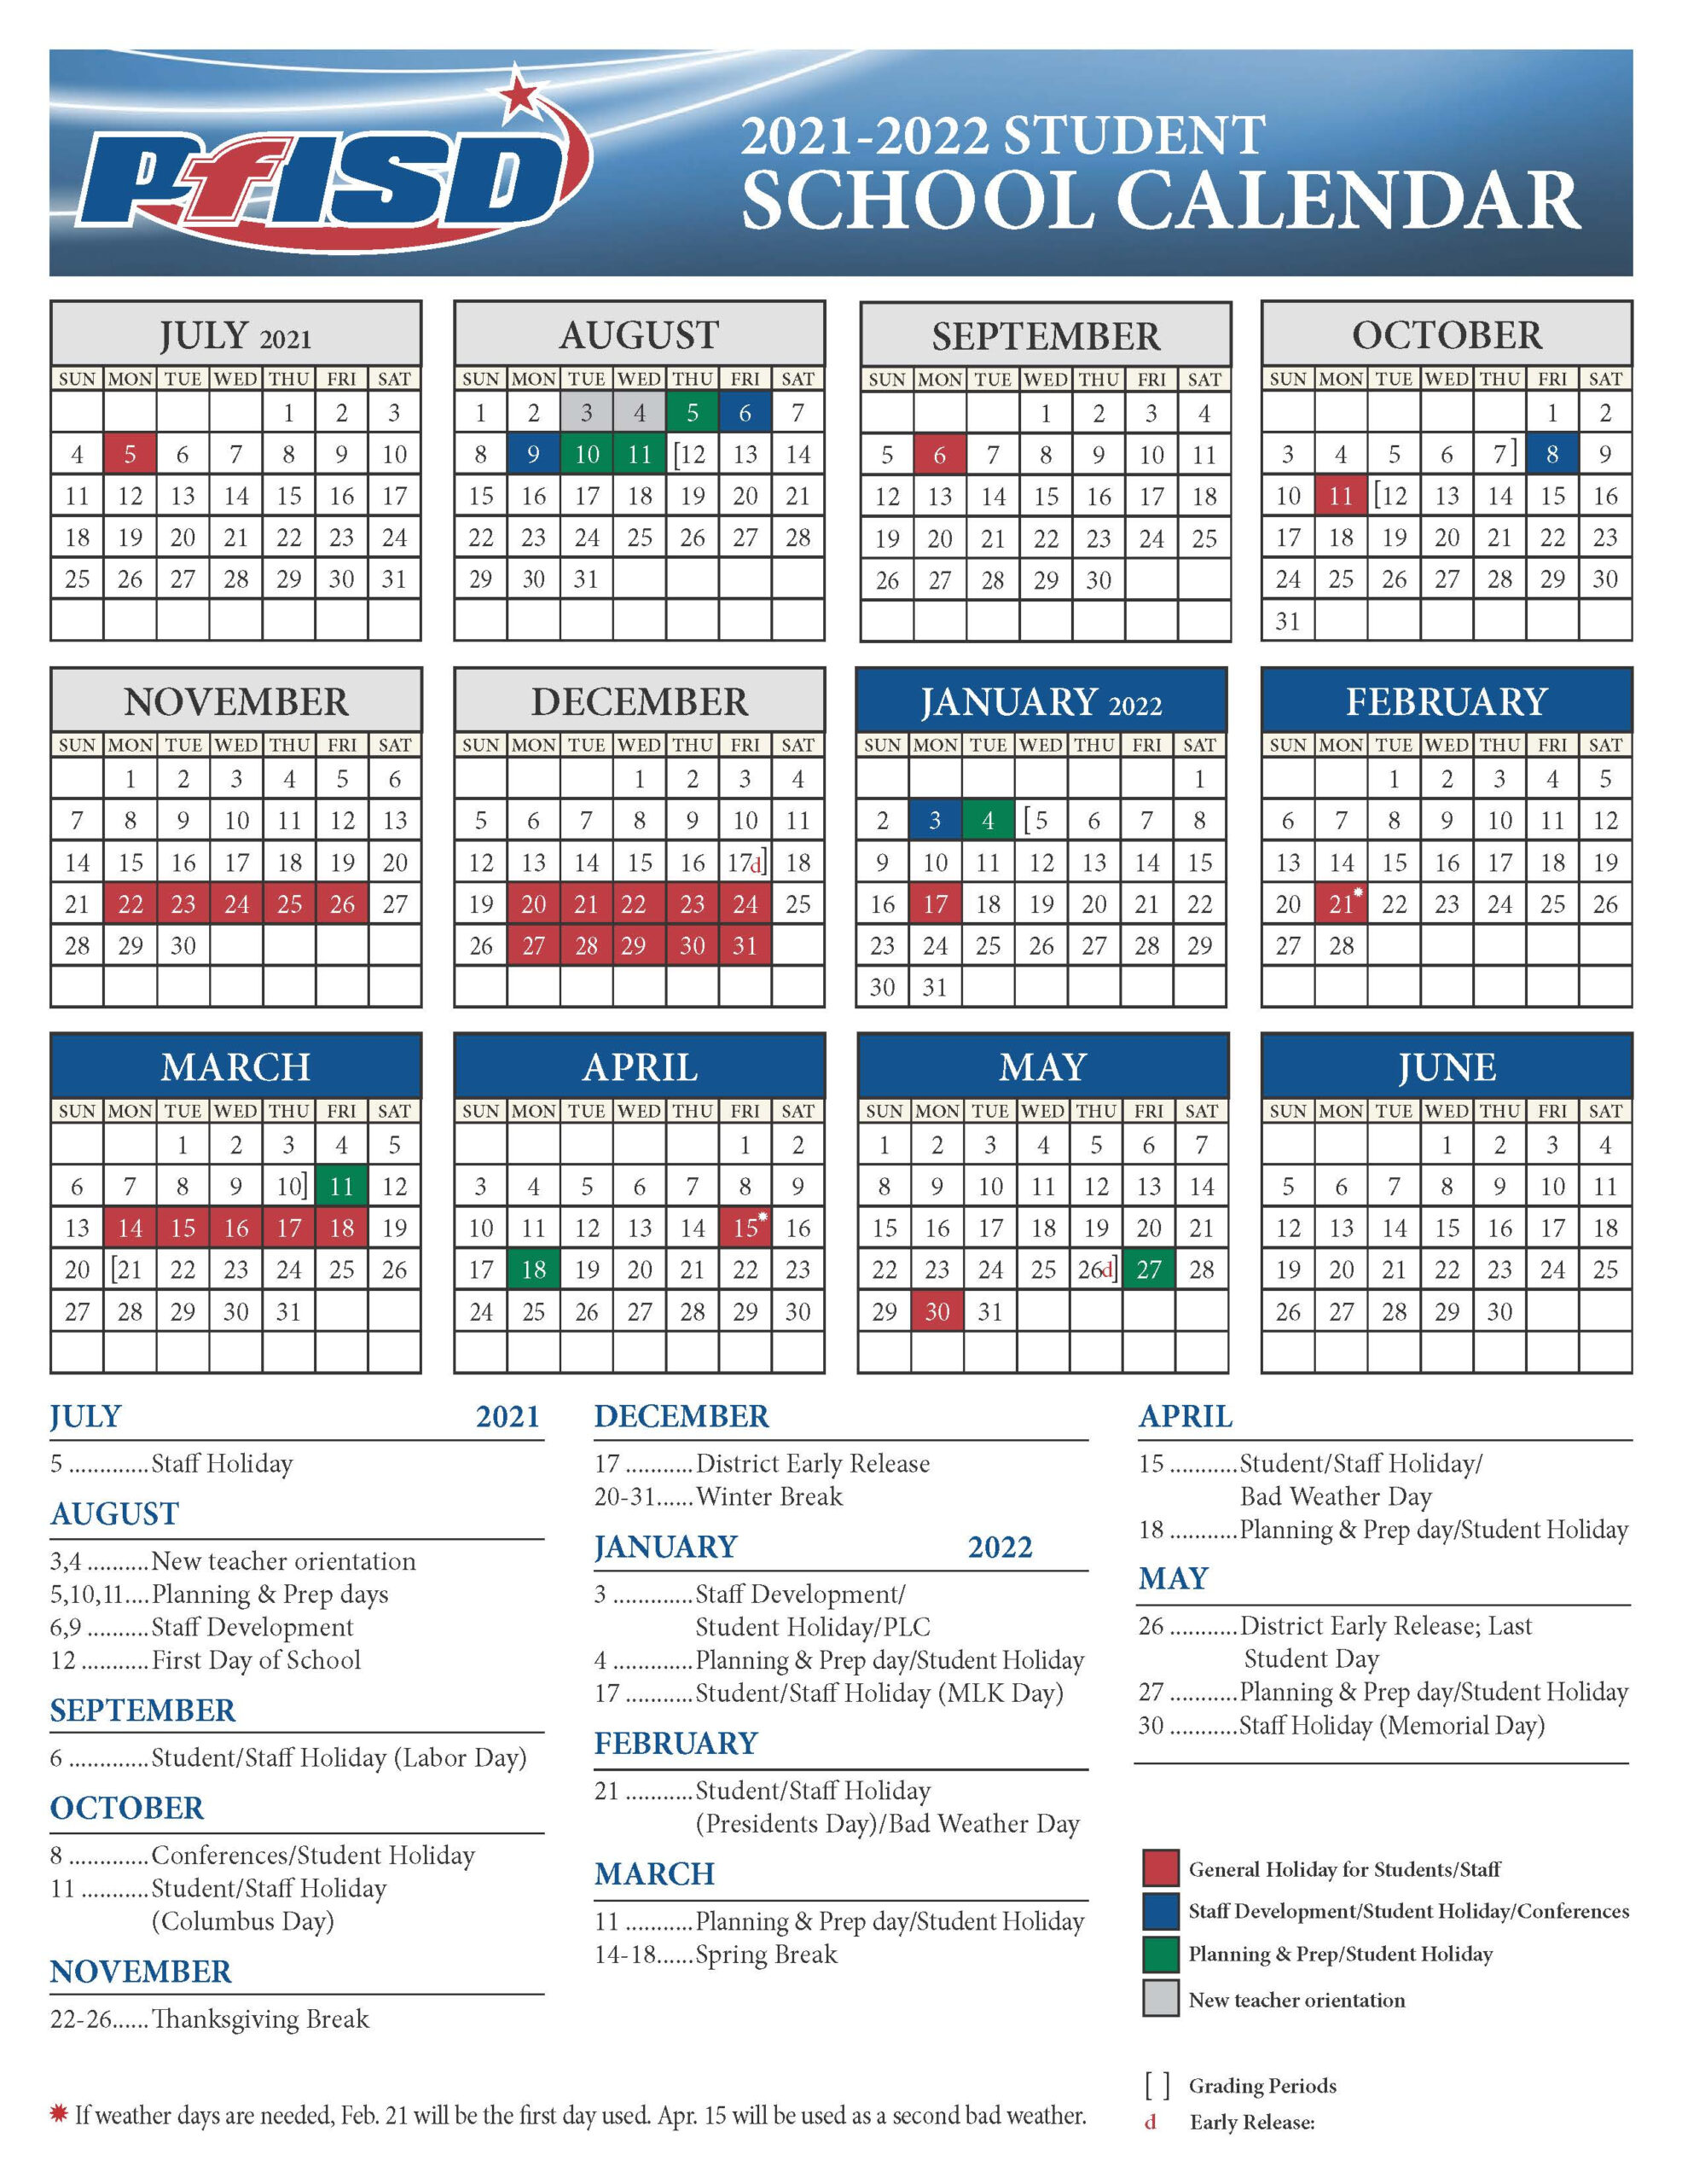 Park University 8 Week Courses Calendar 2022 - August 2022